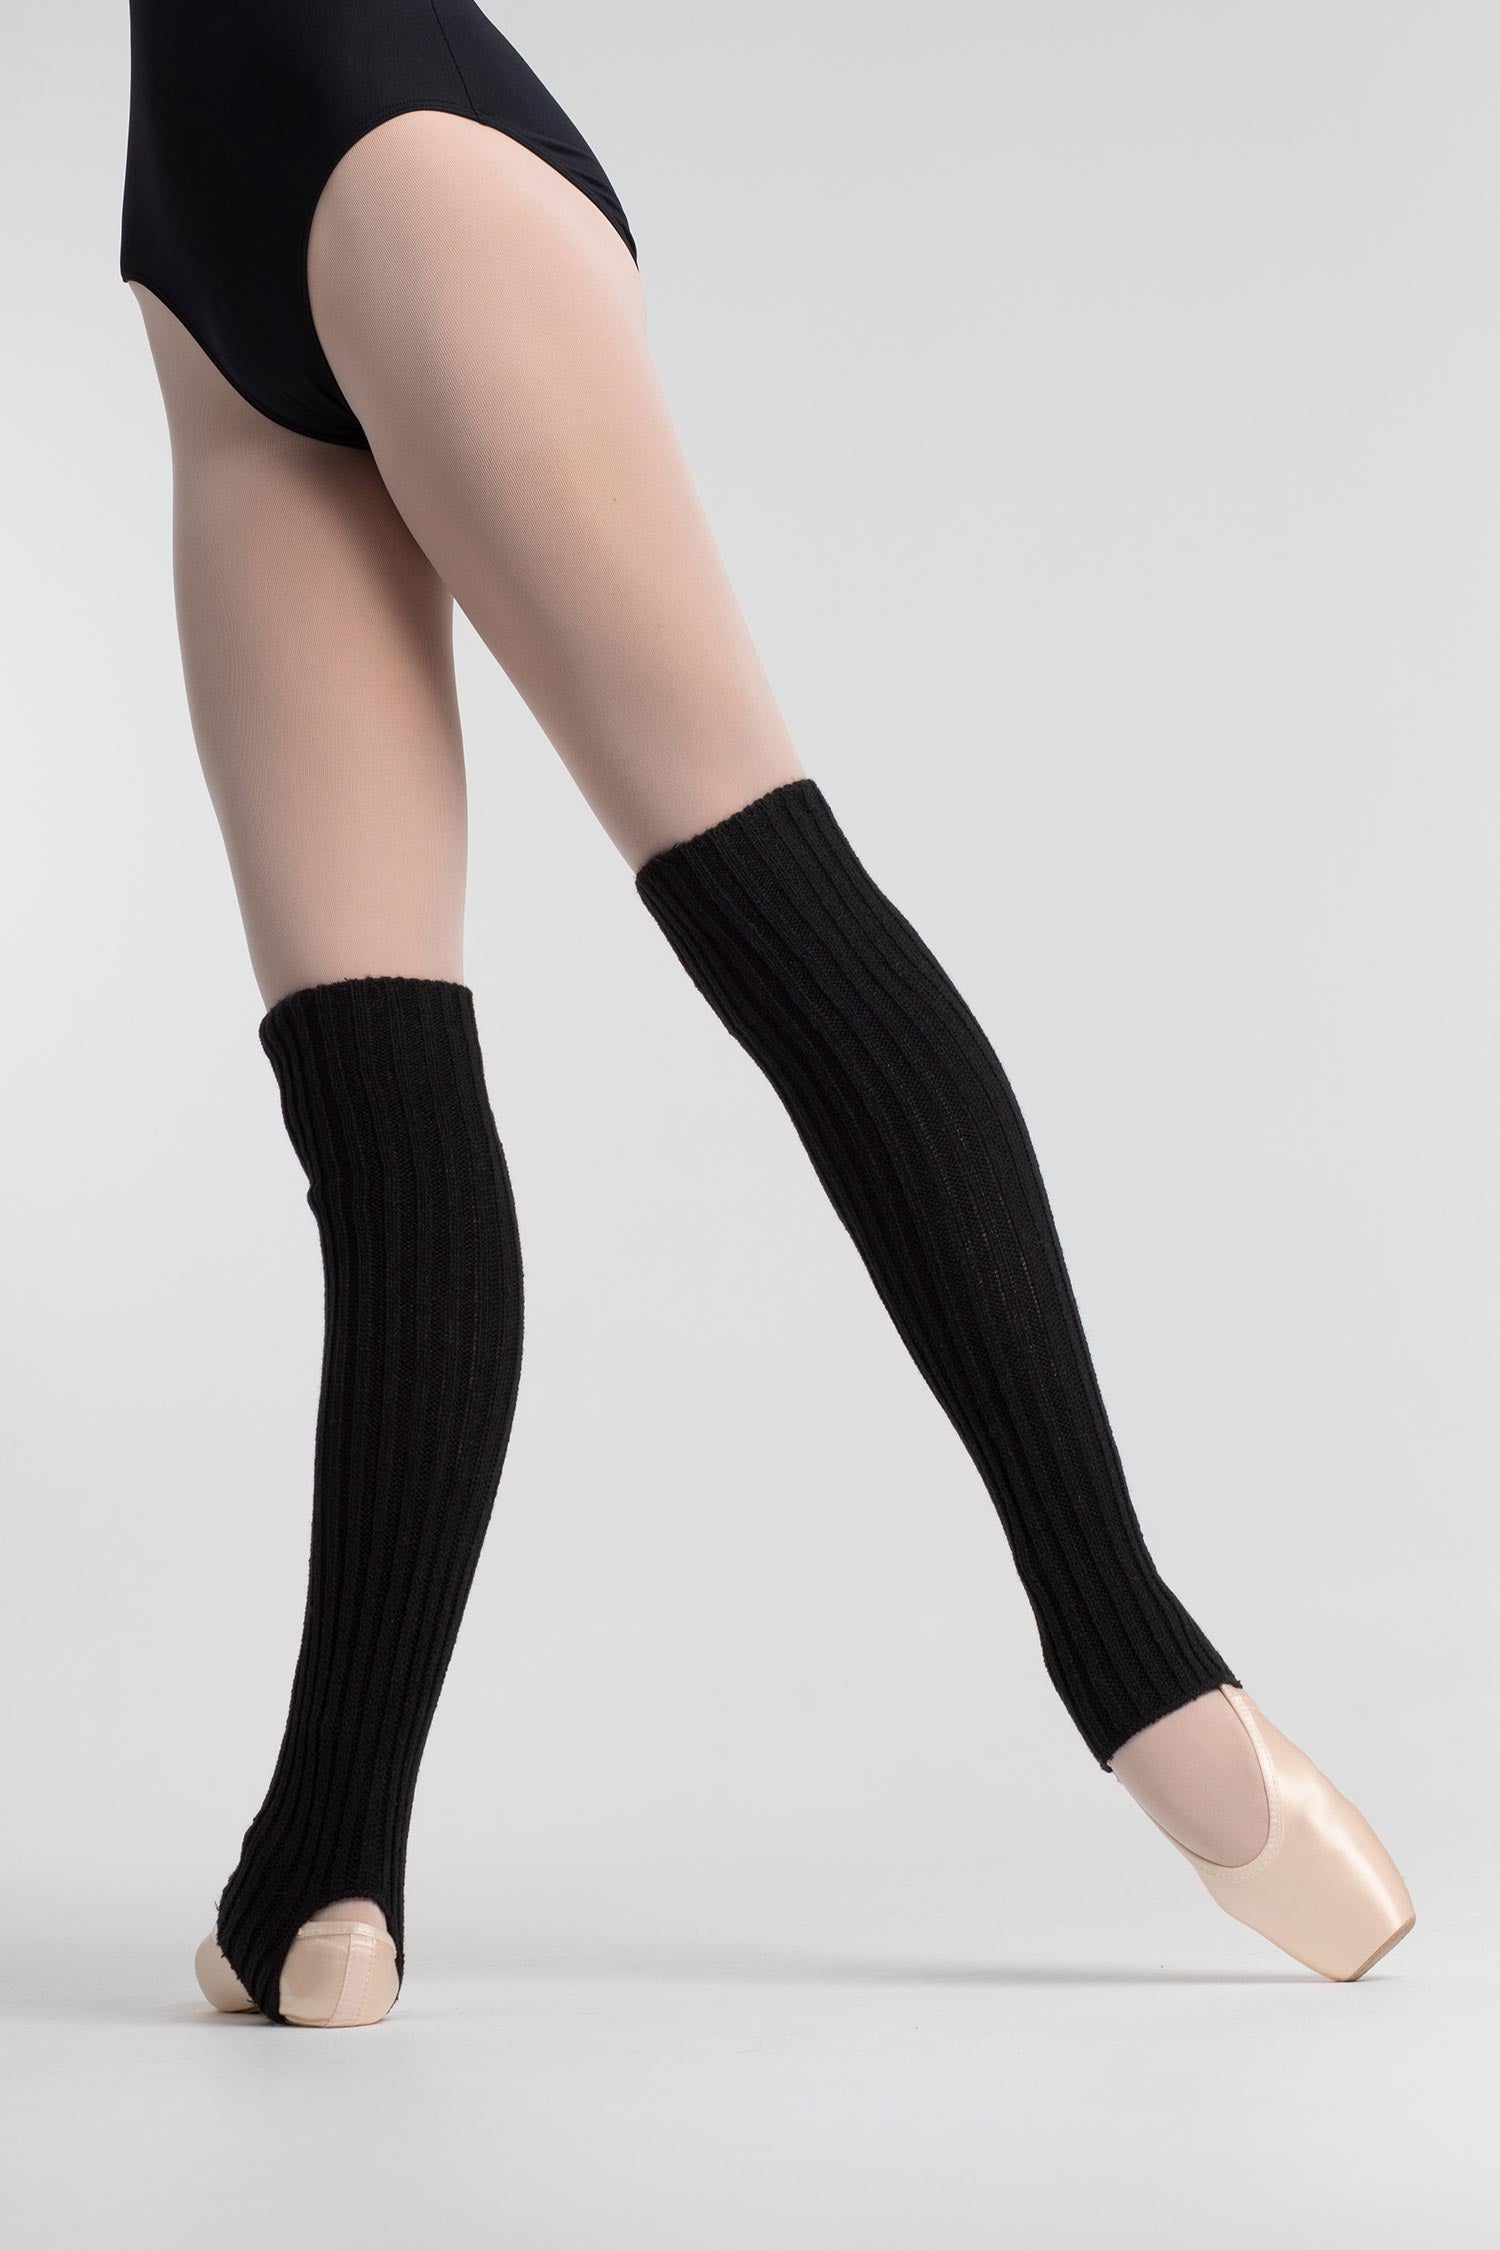 Intermezzo Medcan legwarmers in Black from The Collective Dancewear